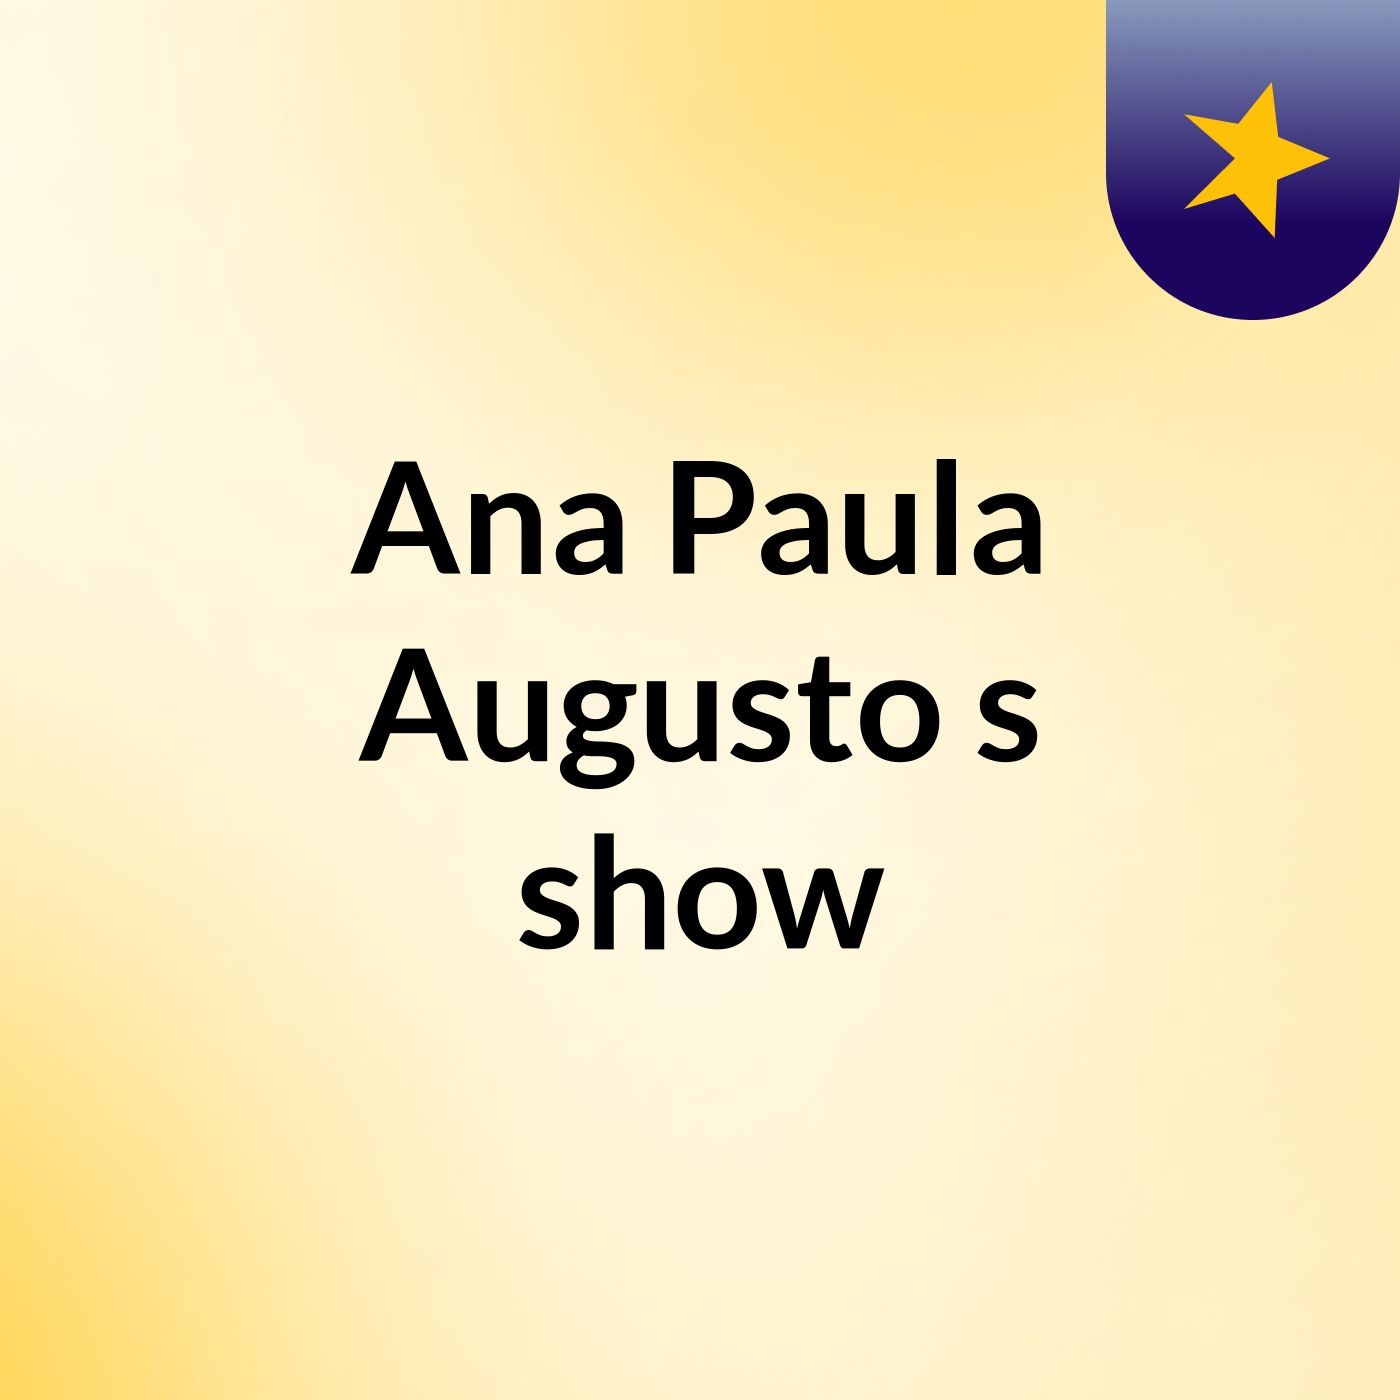 Ana Paula Augusto's show